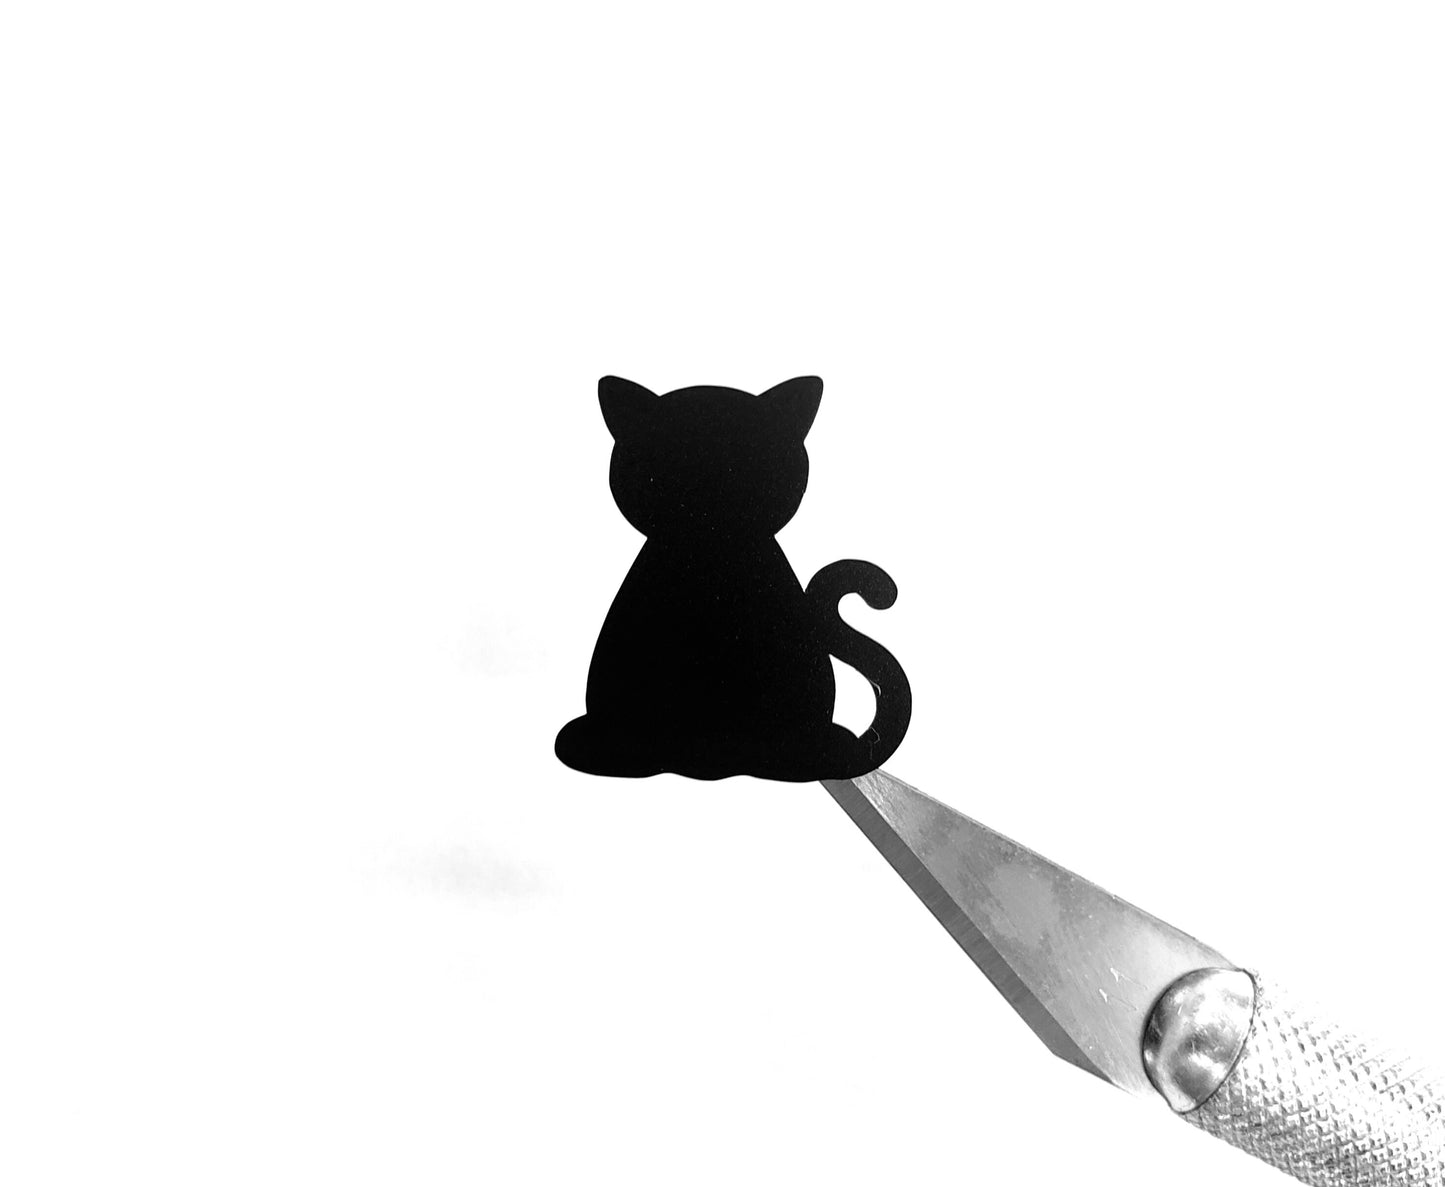 Cat Stickers, black cat silhouette, choose number of stickers, pet food reminder, planner vinyl decals